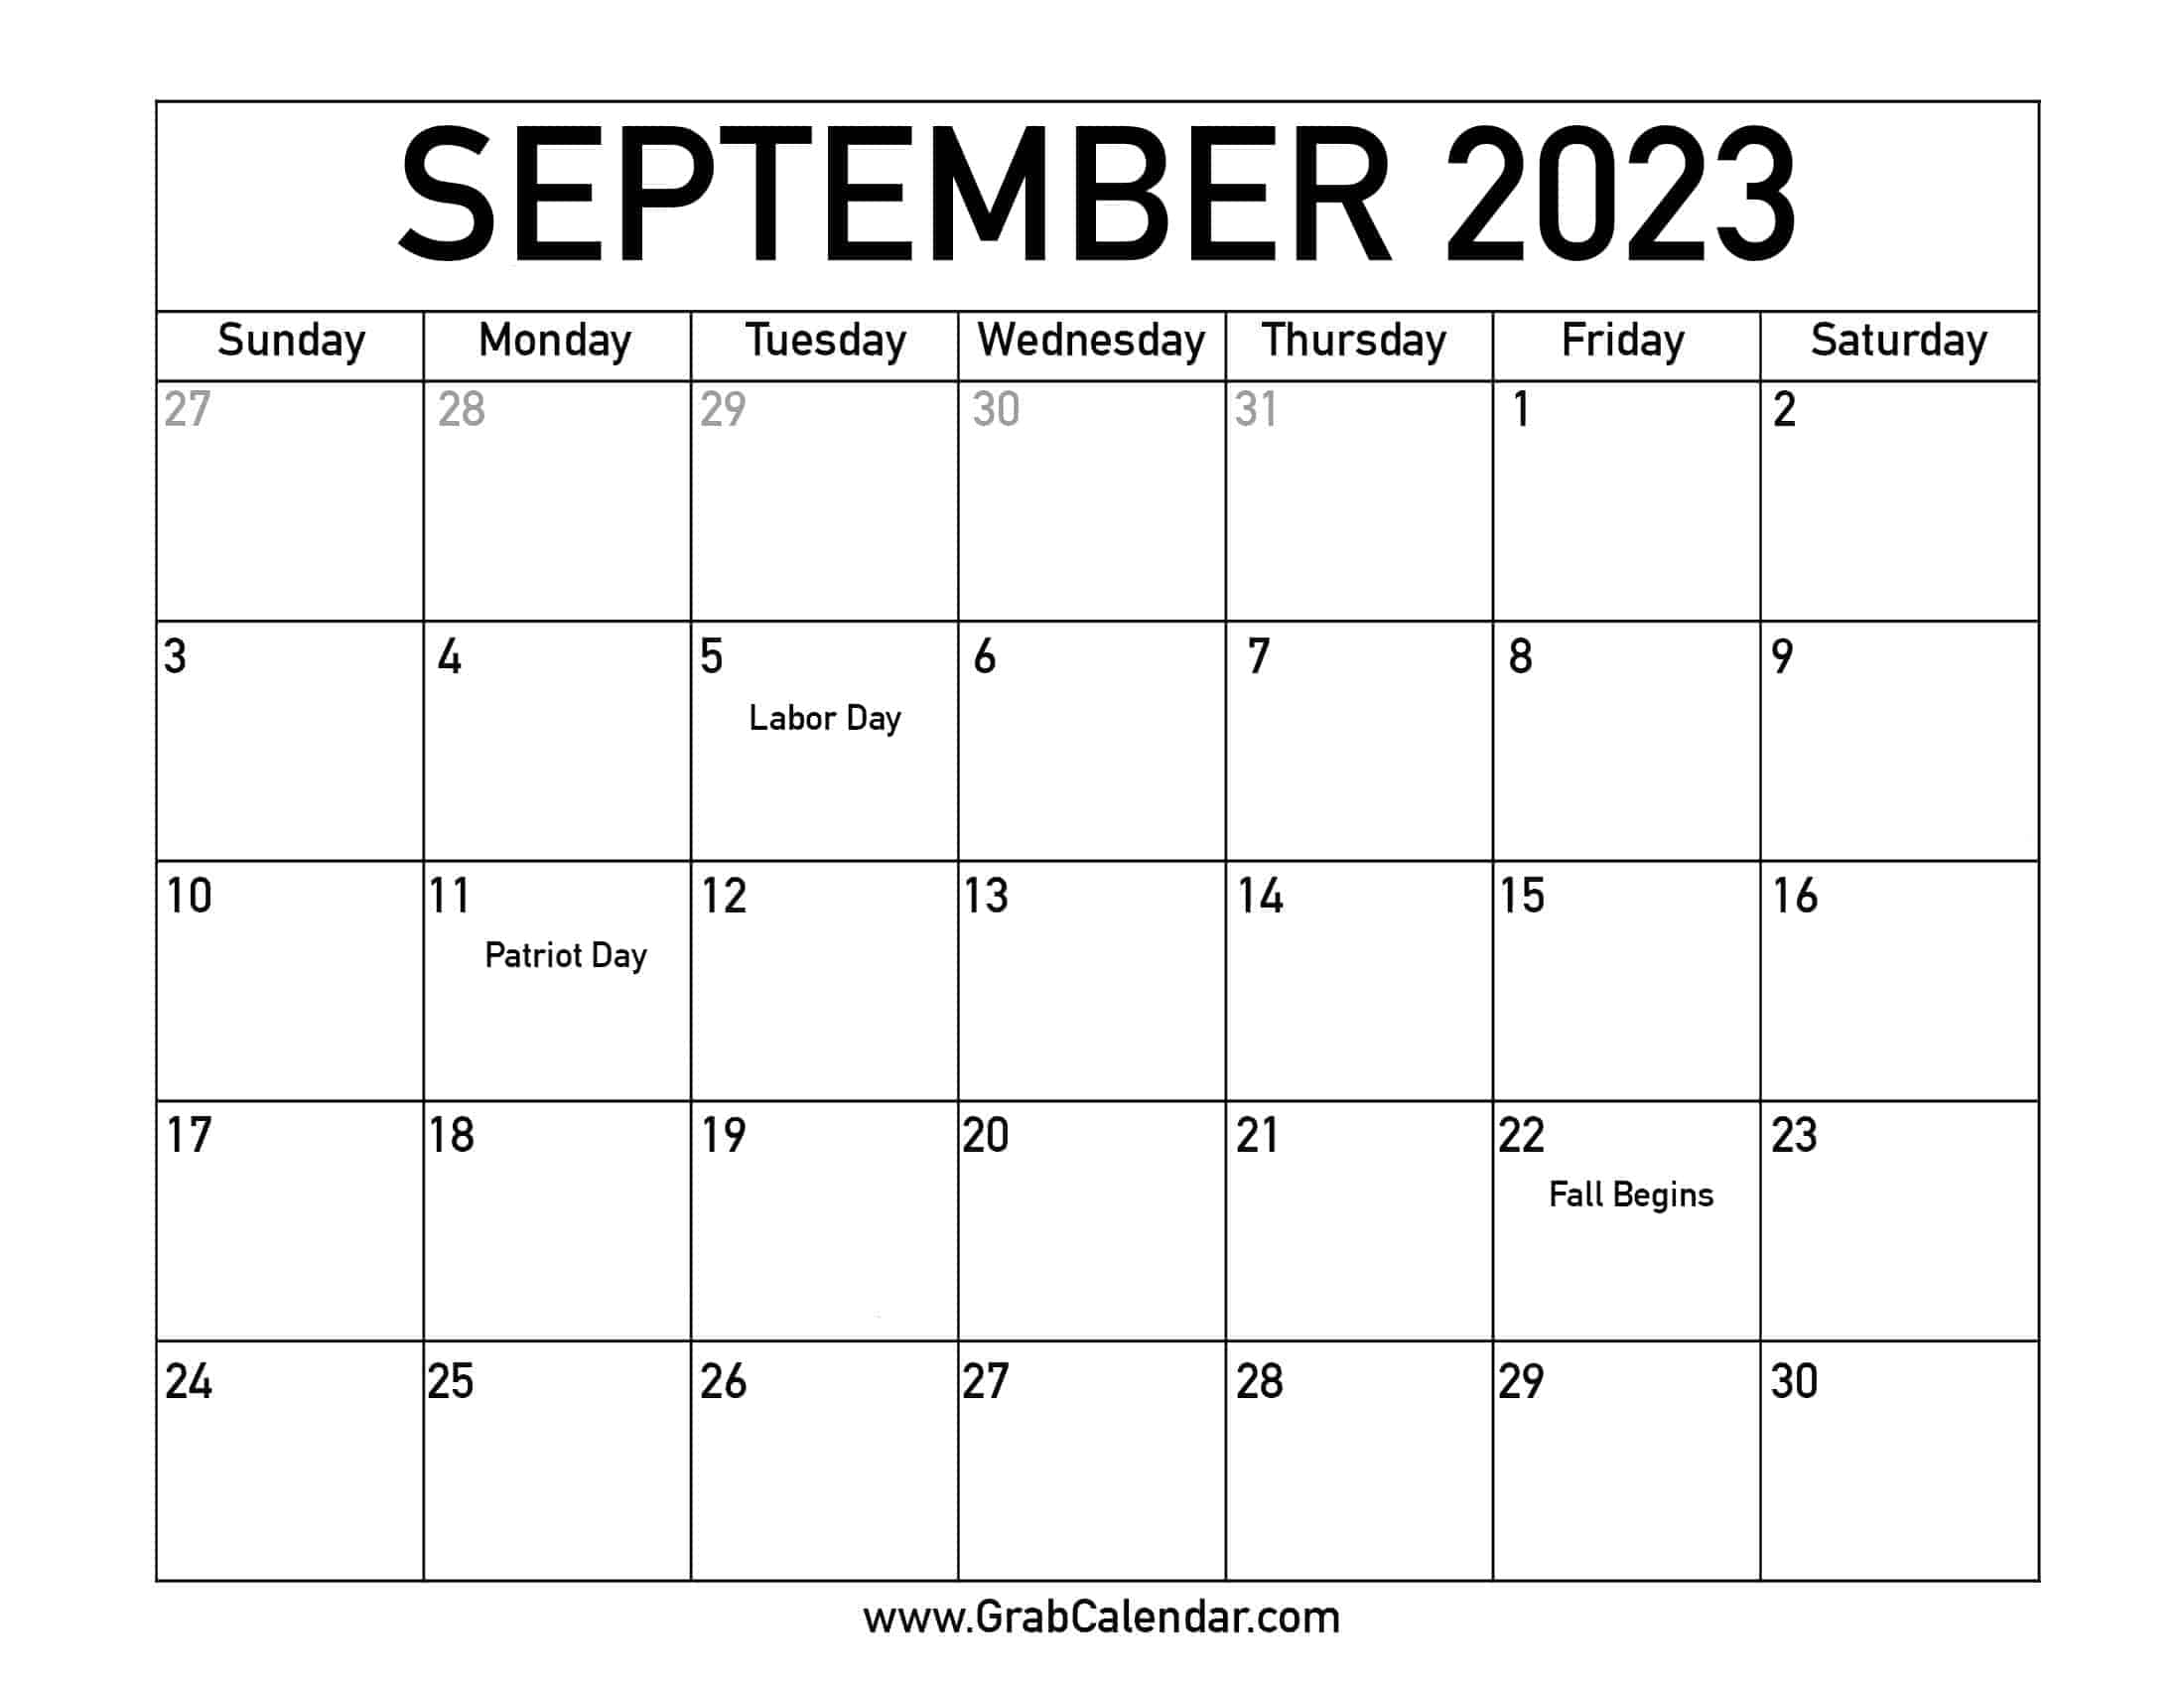 September 2023 Calendar For Printing September 2023 Calendar Free Printable With Holidays 